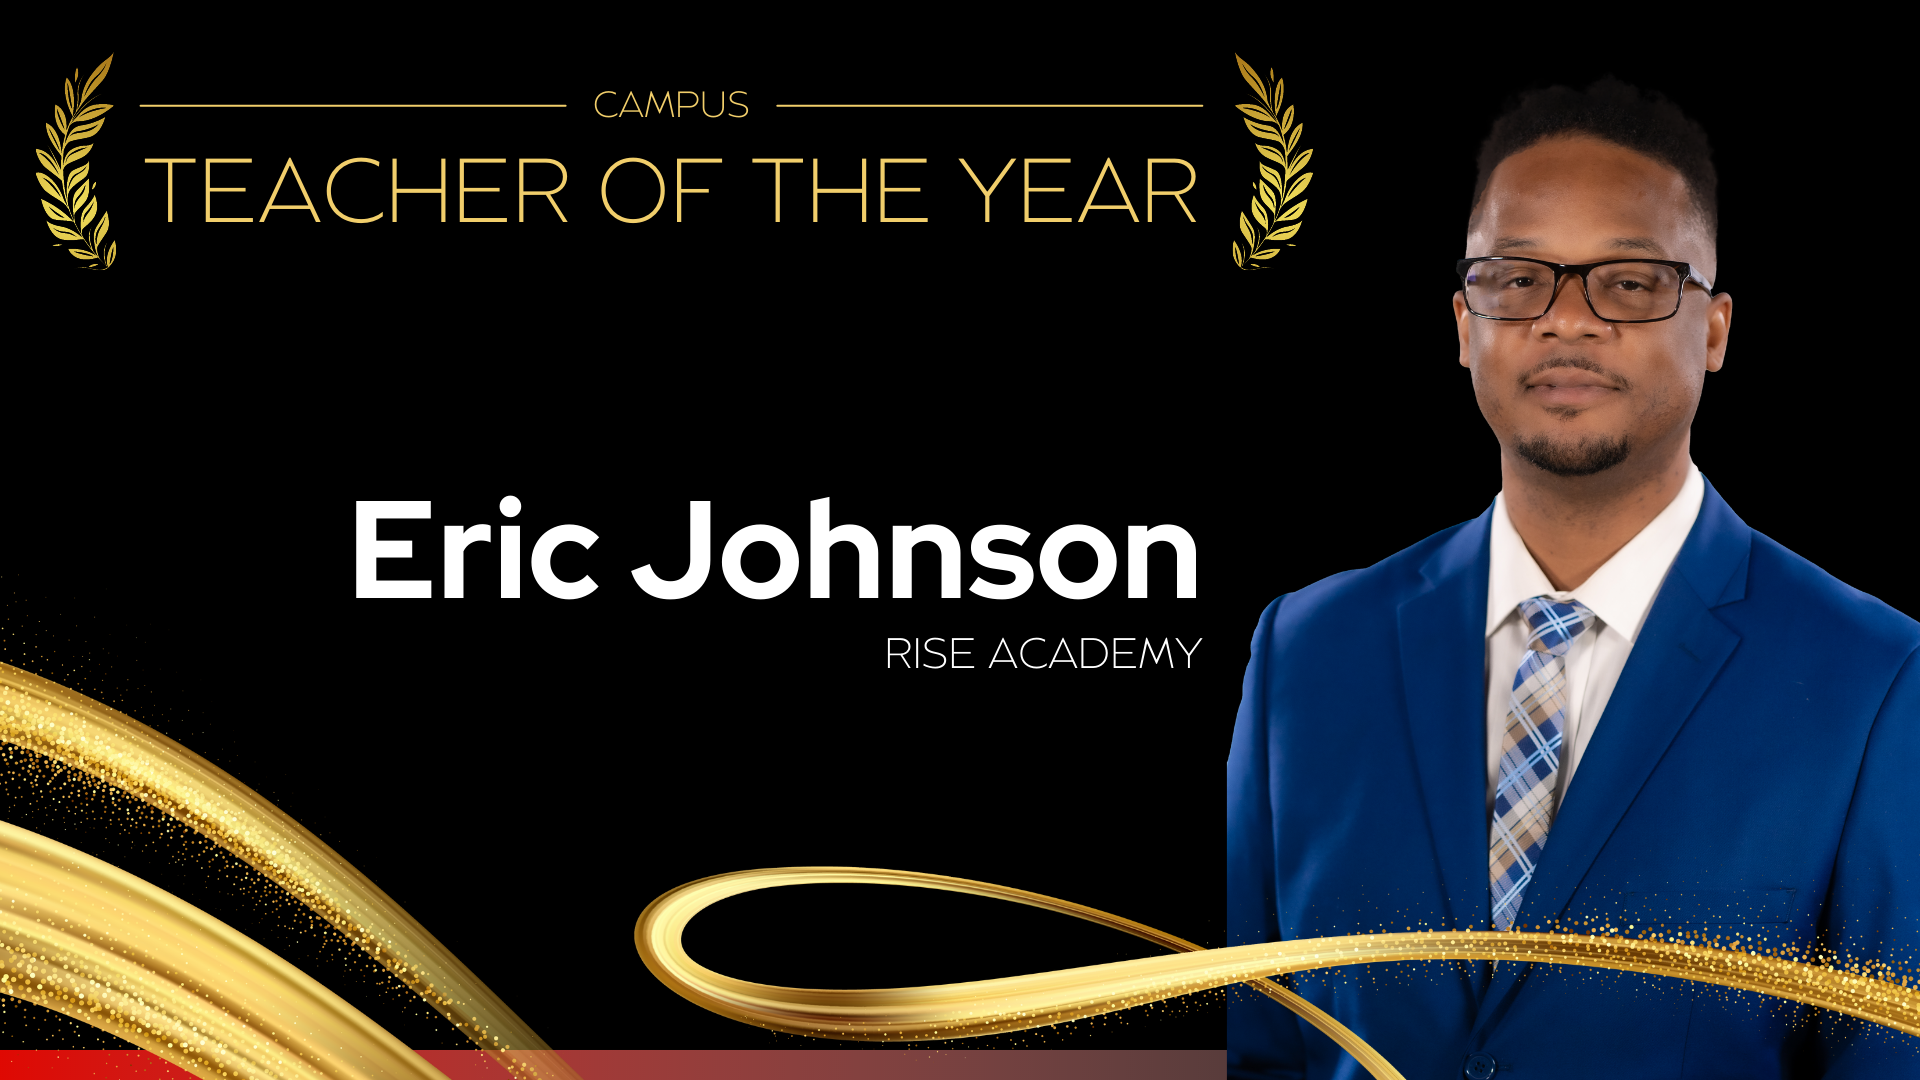 Campus Teacher of the Year RISE Academy - Eric Johnson